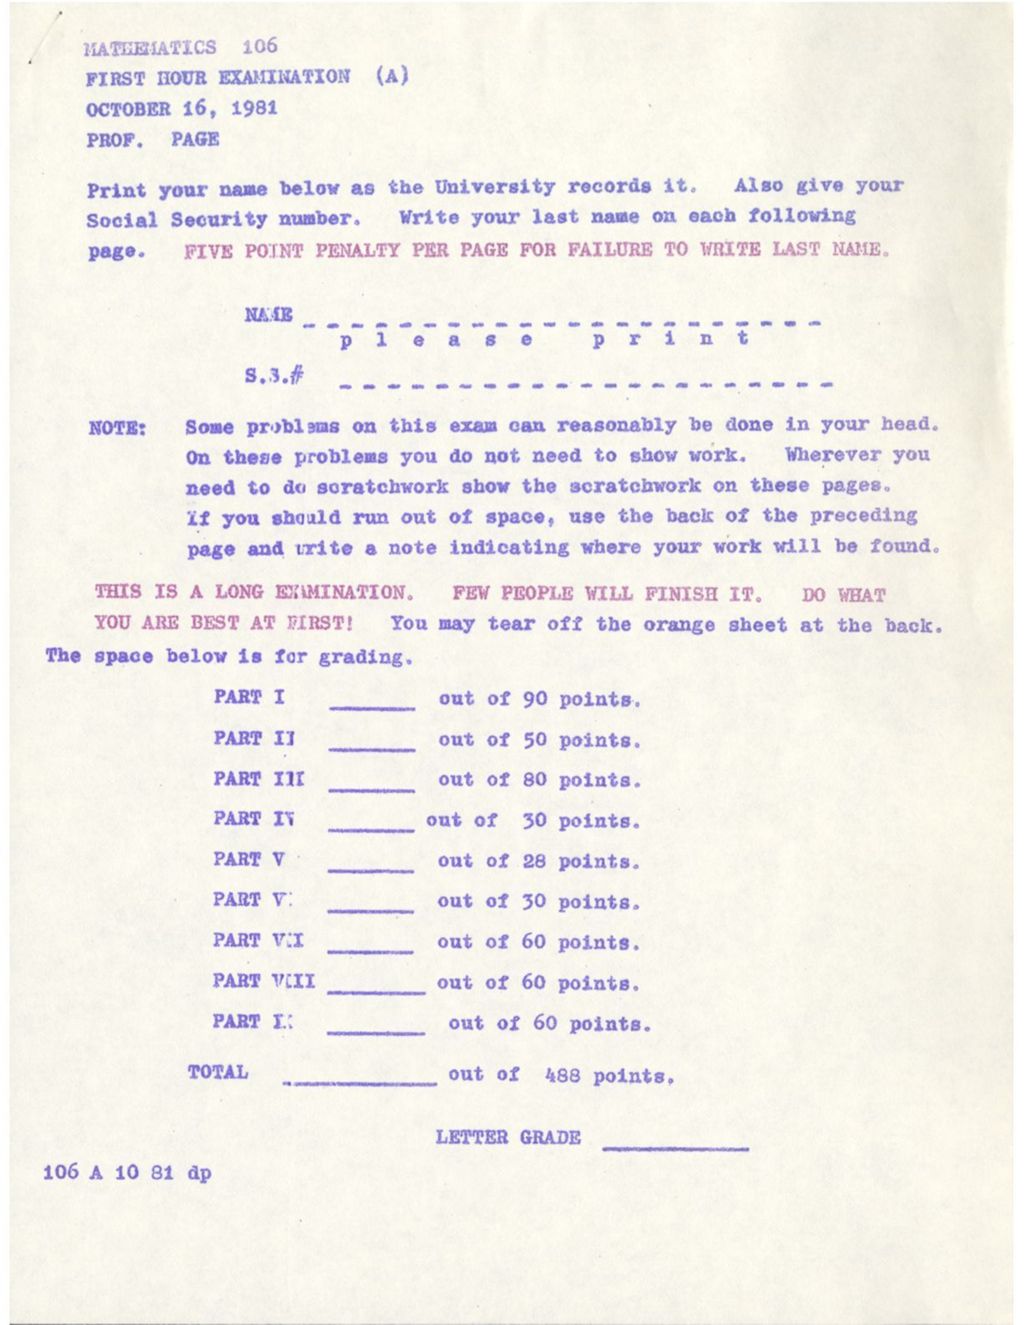 Miniature of Math 106 First Hour Examination Oct. 16 1981